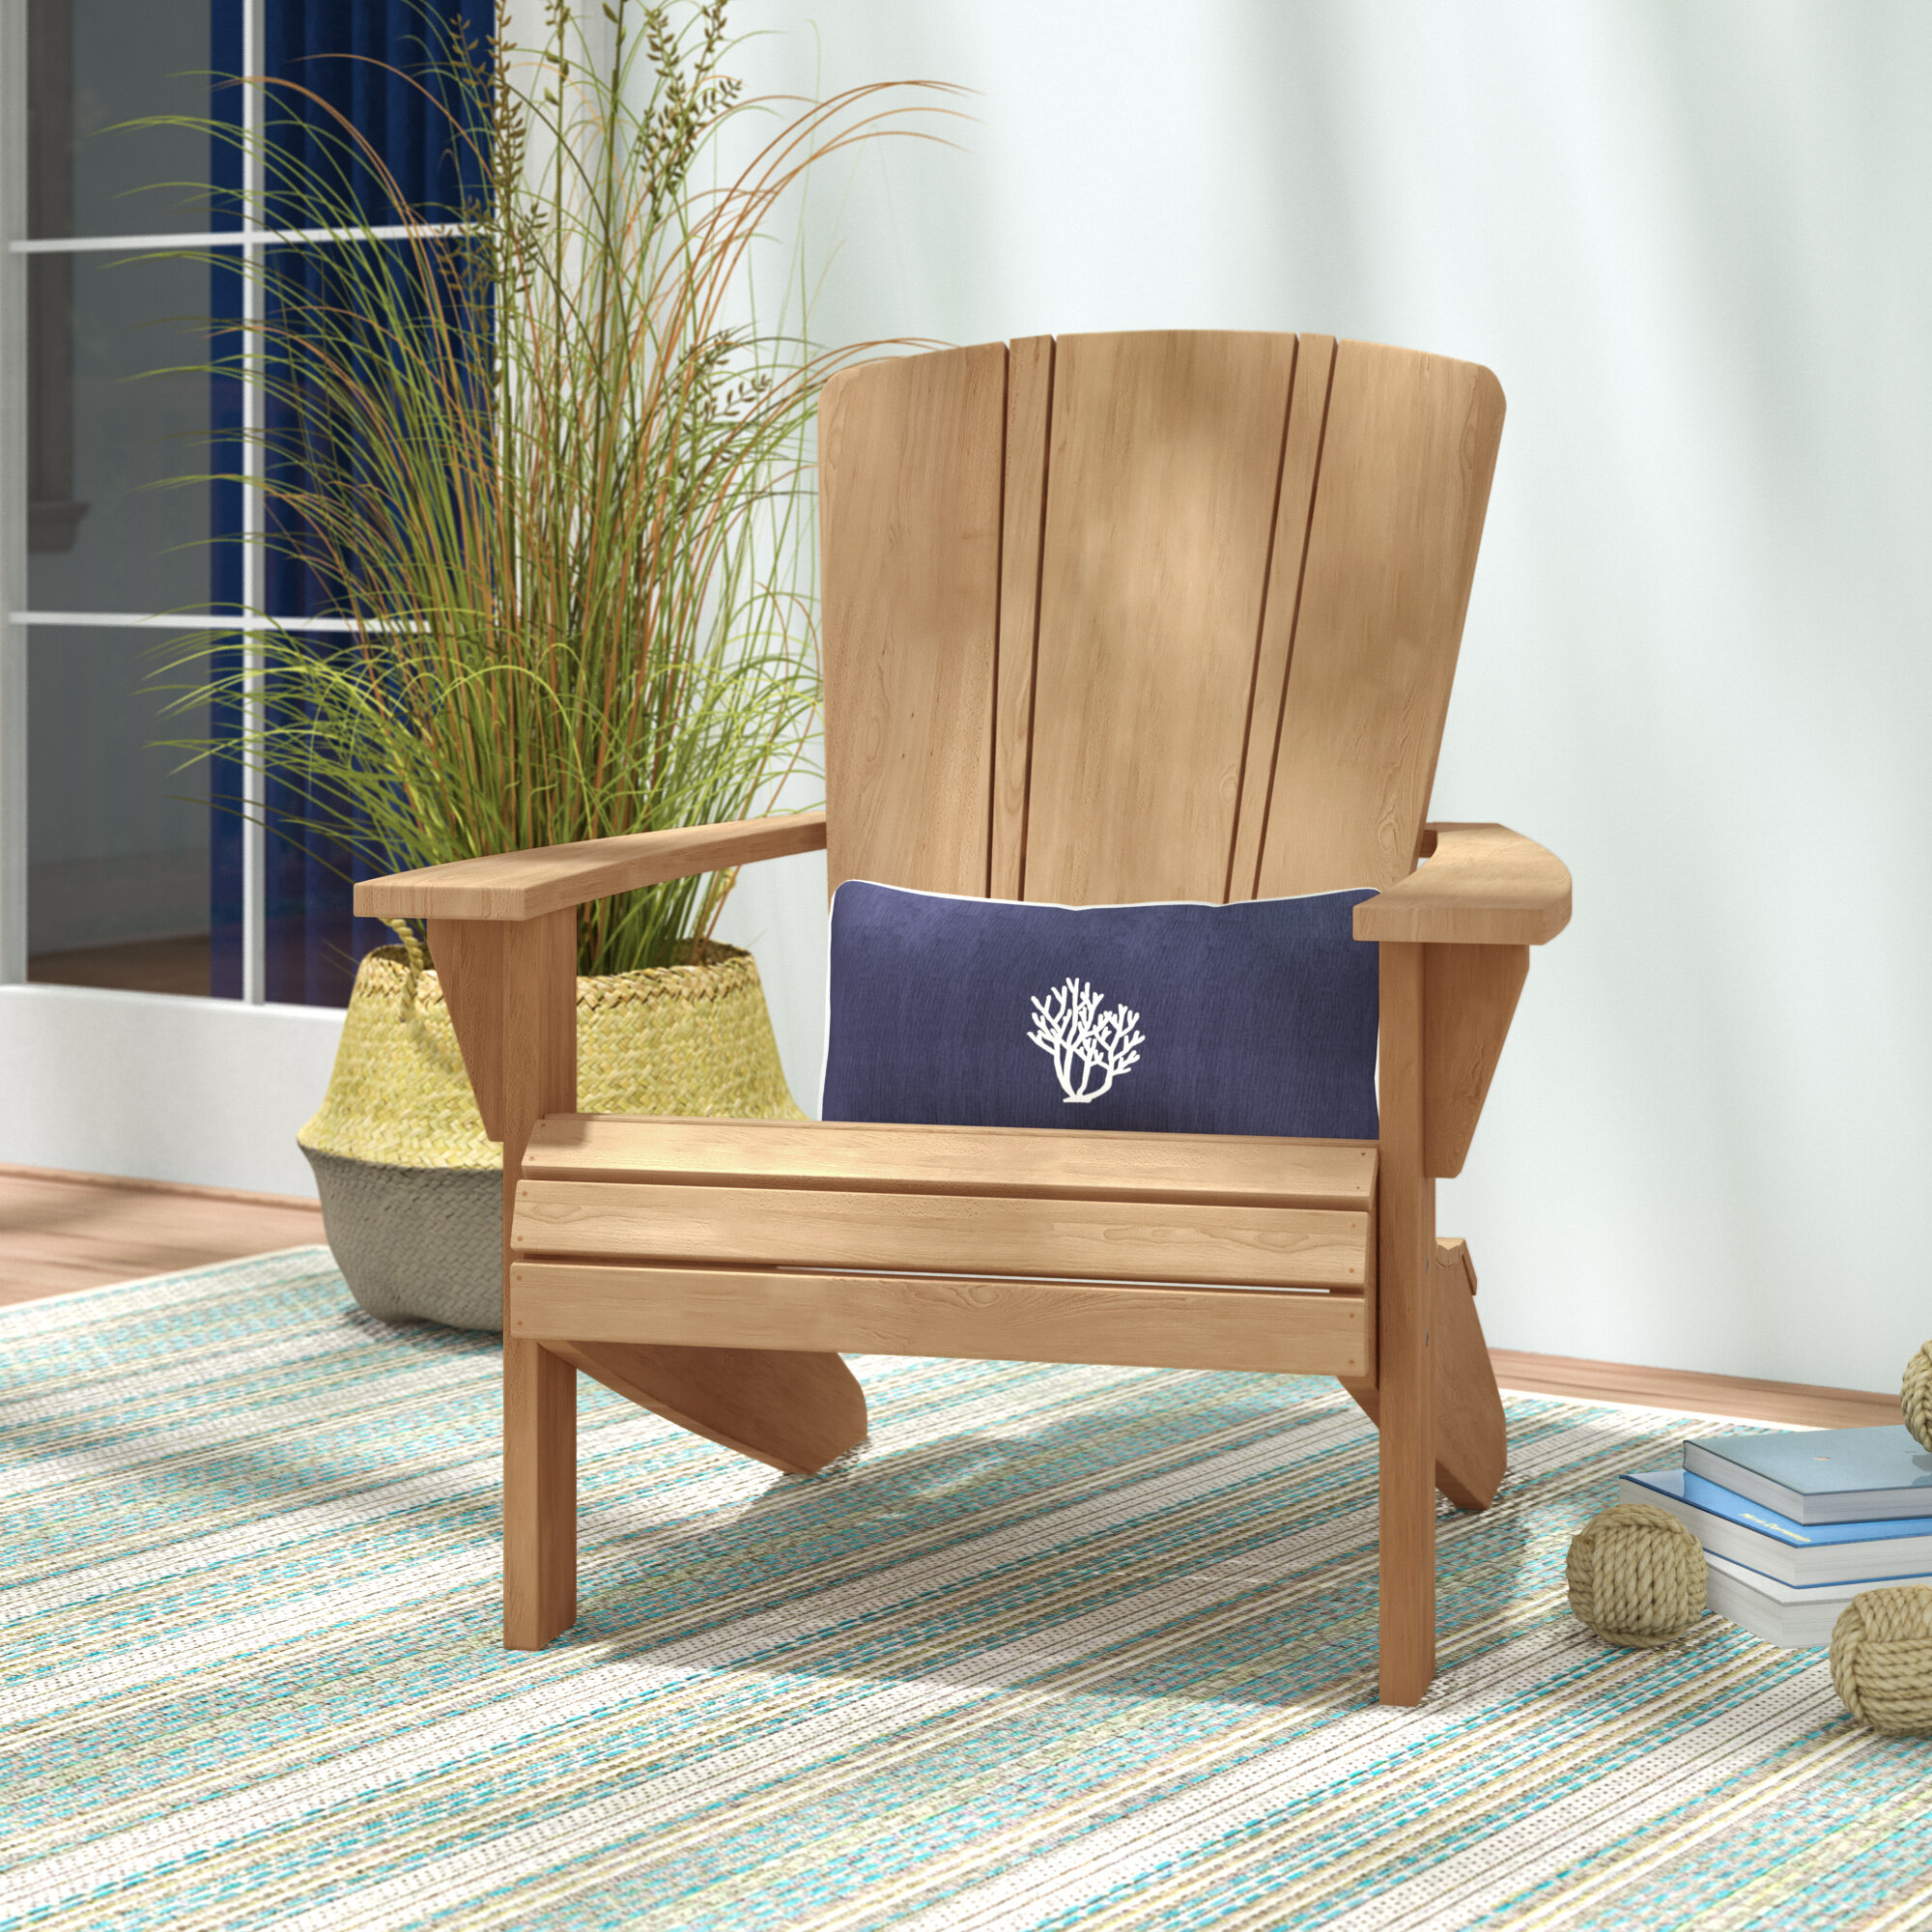 Premium Knot-free Cedar Adirondack Chair Kit 